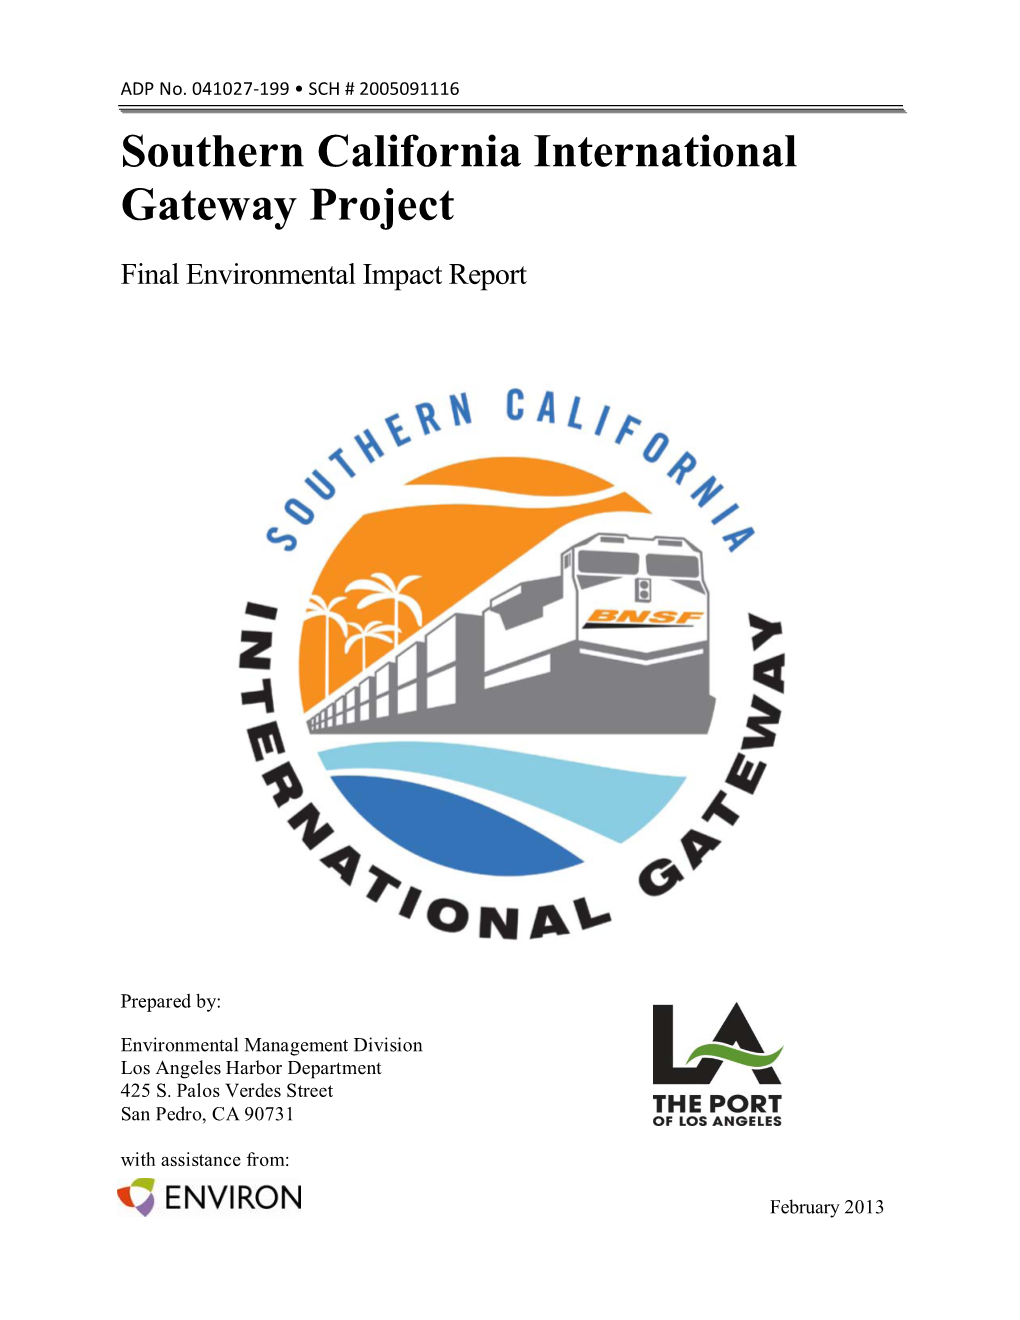 Southern California International Gateway Project Final Environmental Impact Report